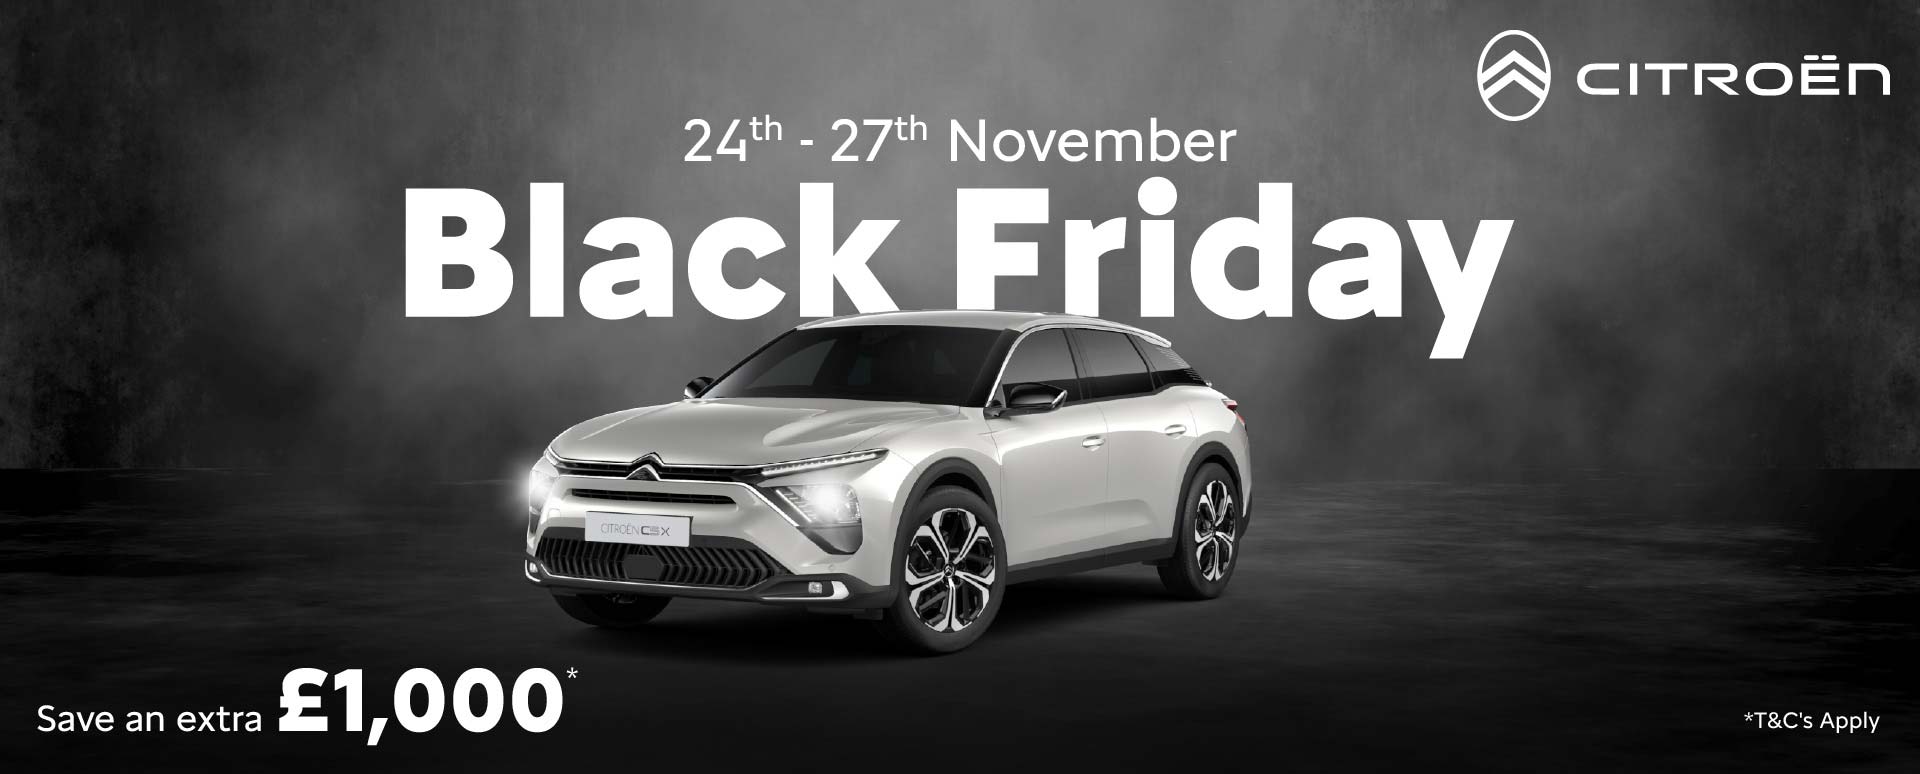 Citroën Black Friday Event